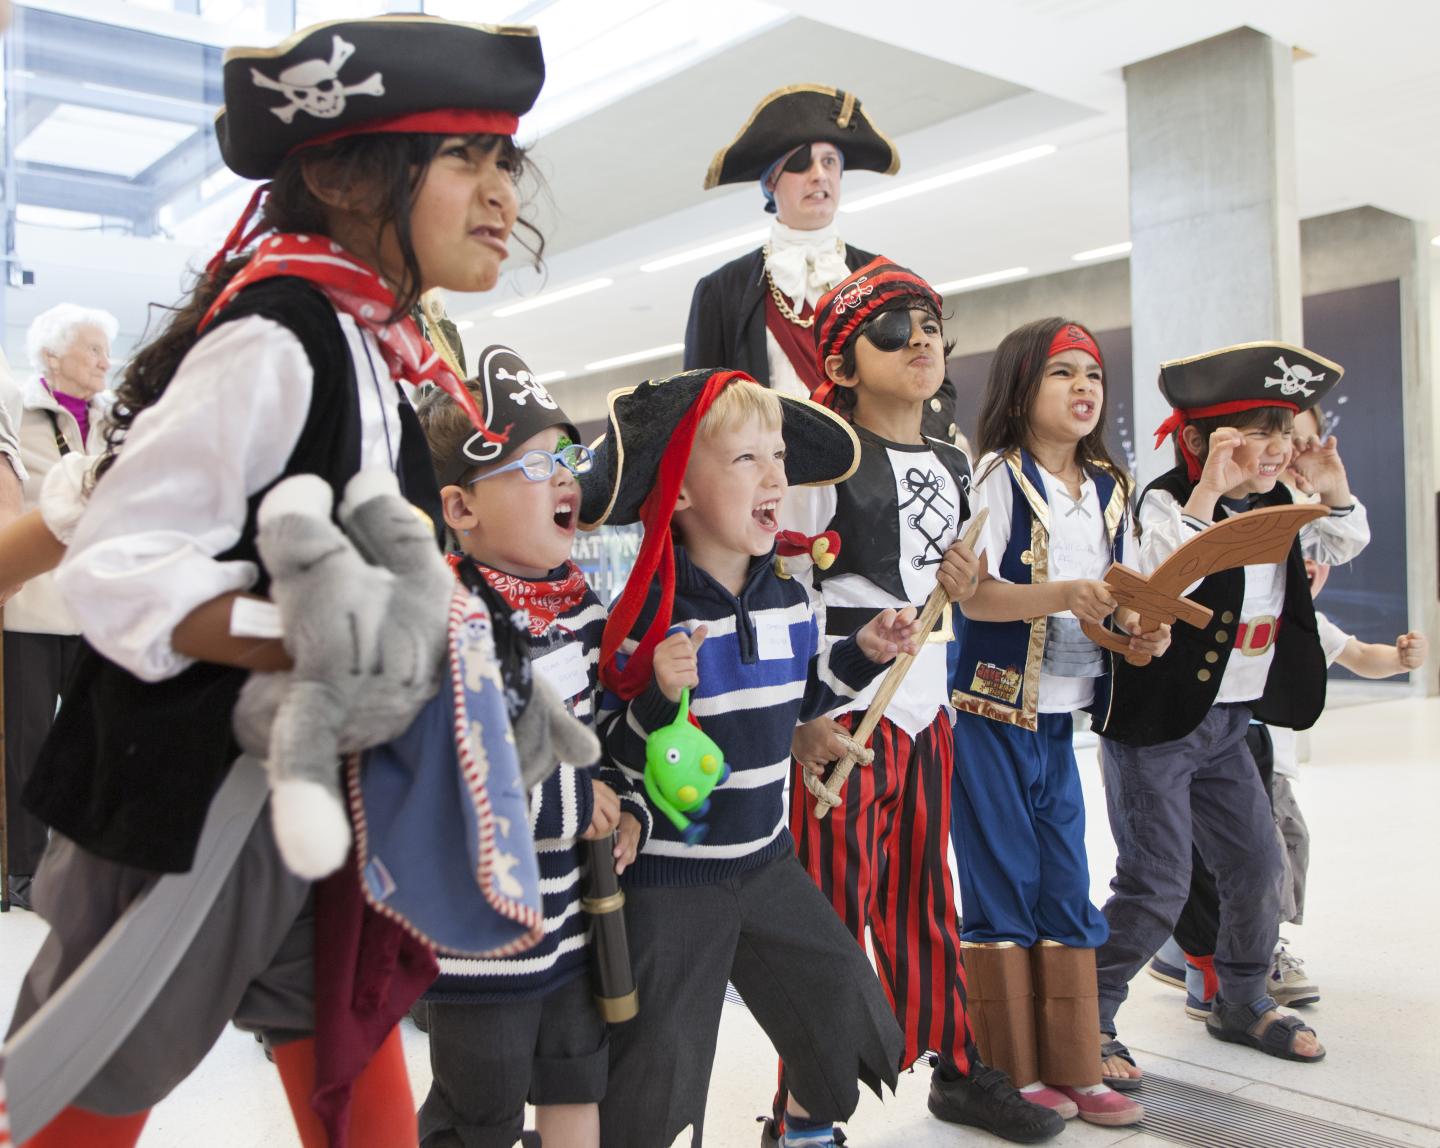 Children dressed as pirates